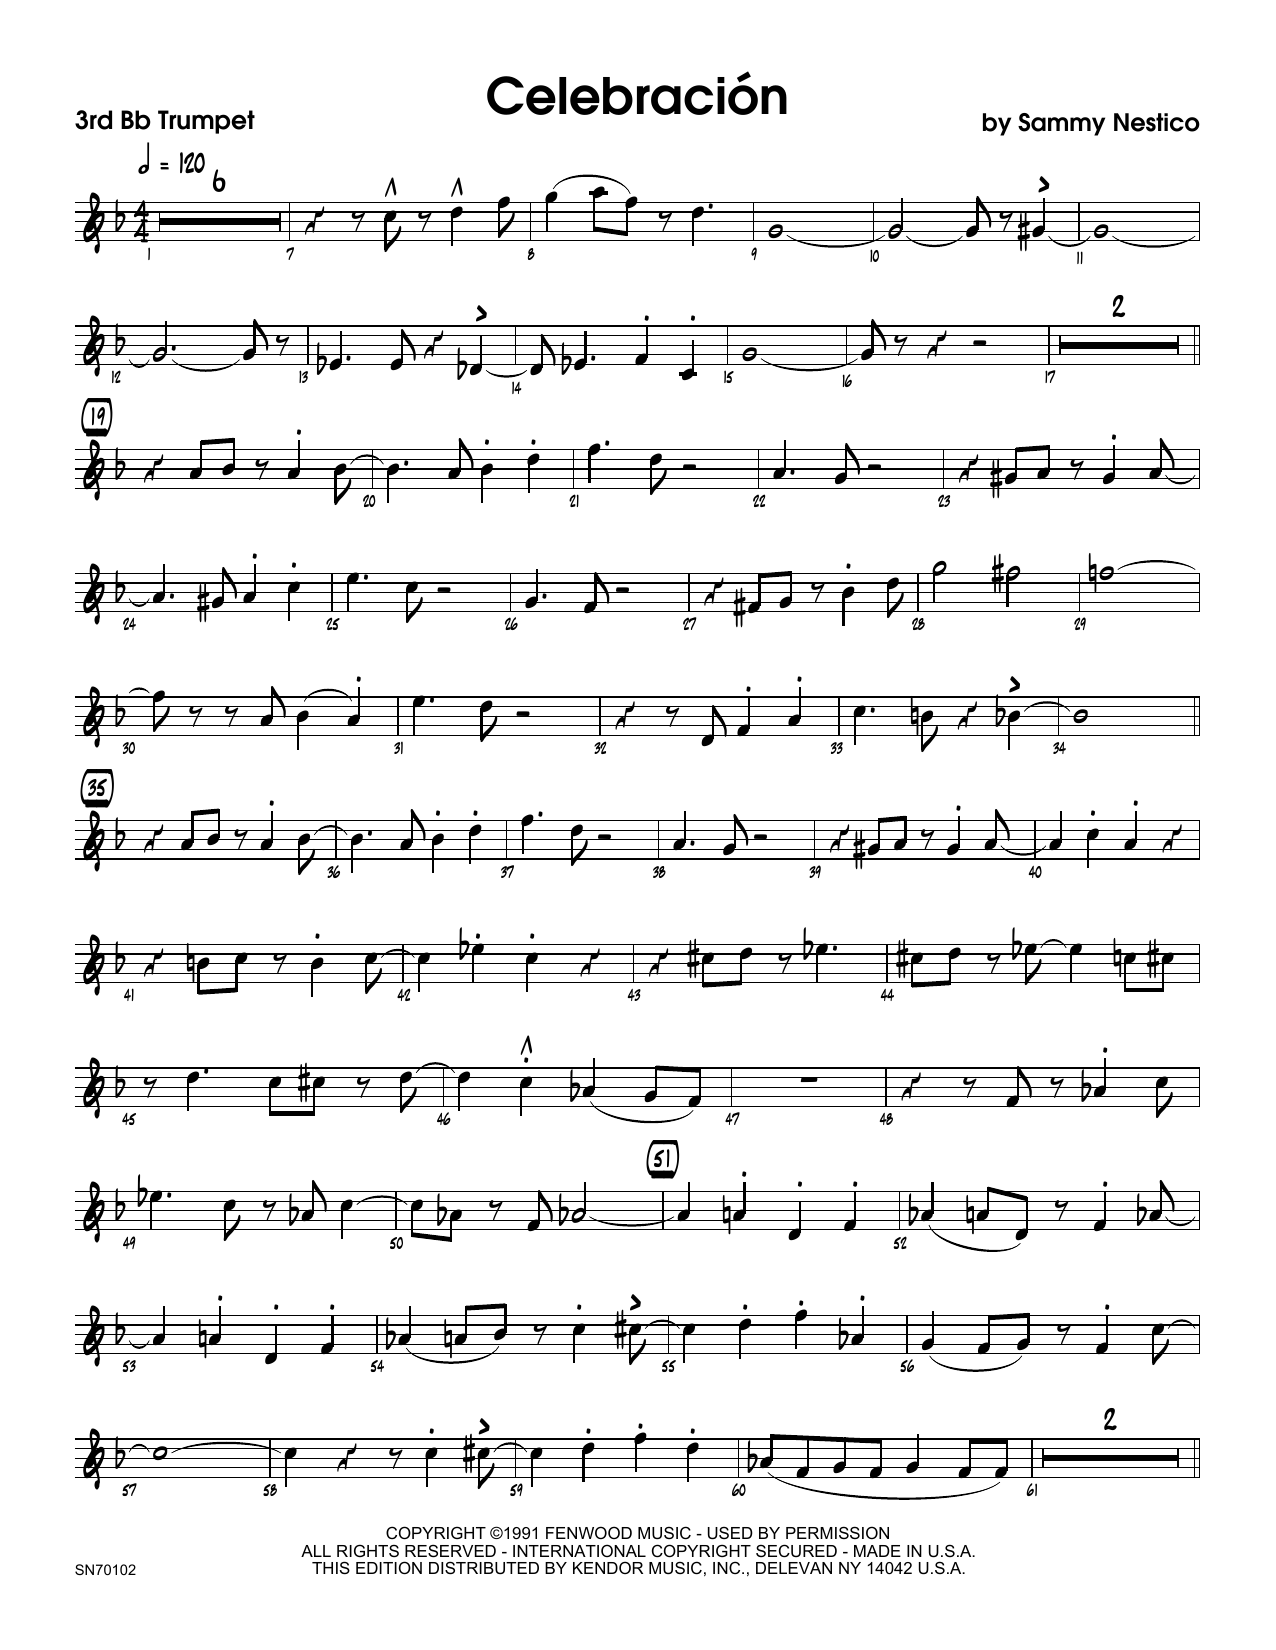 Download Sammy Nestico Celebracion - 3rd Bb Trumpet Sheet Music